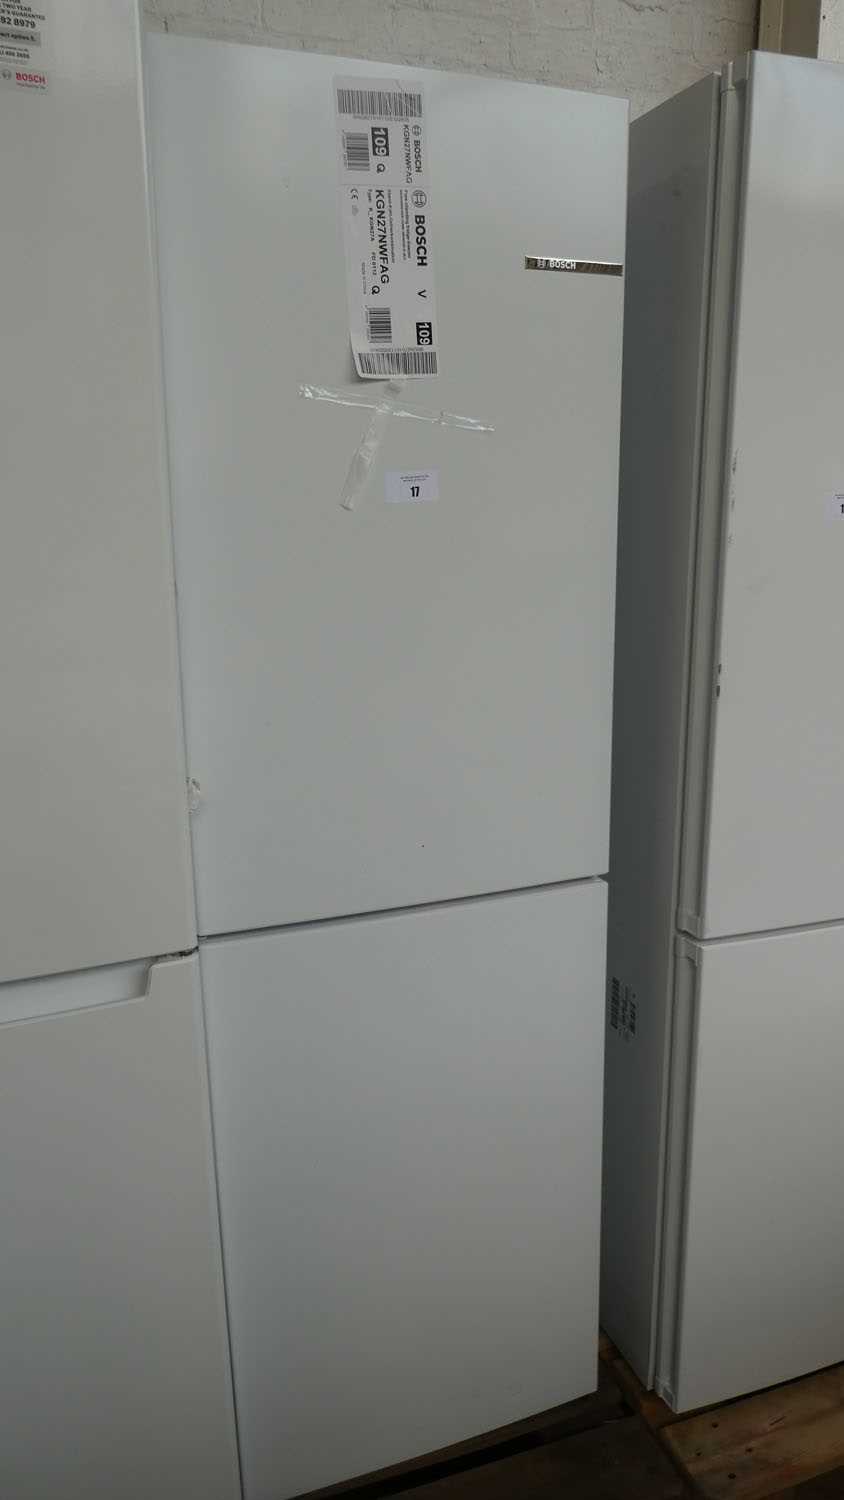 Lot 17 - KGN27NWFAGB Bosch Free-standing fridge-freezer